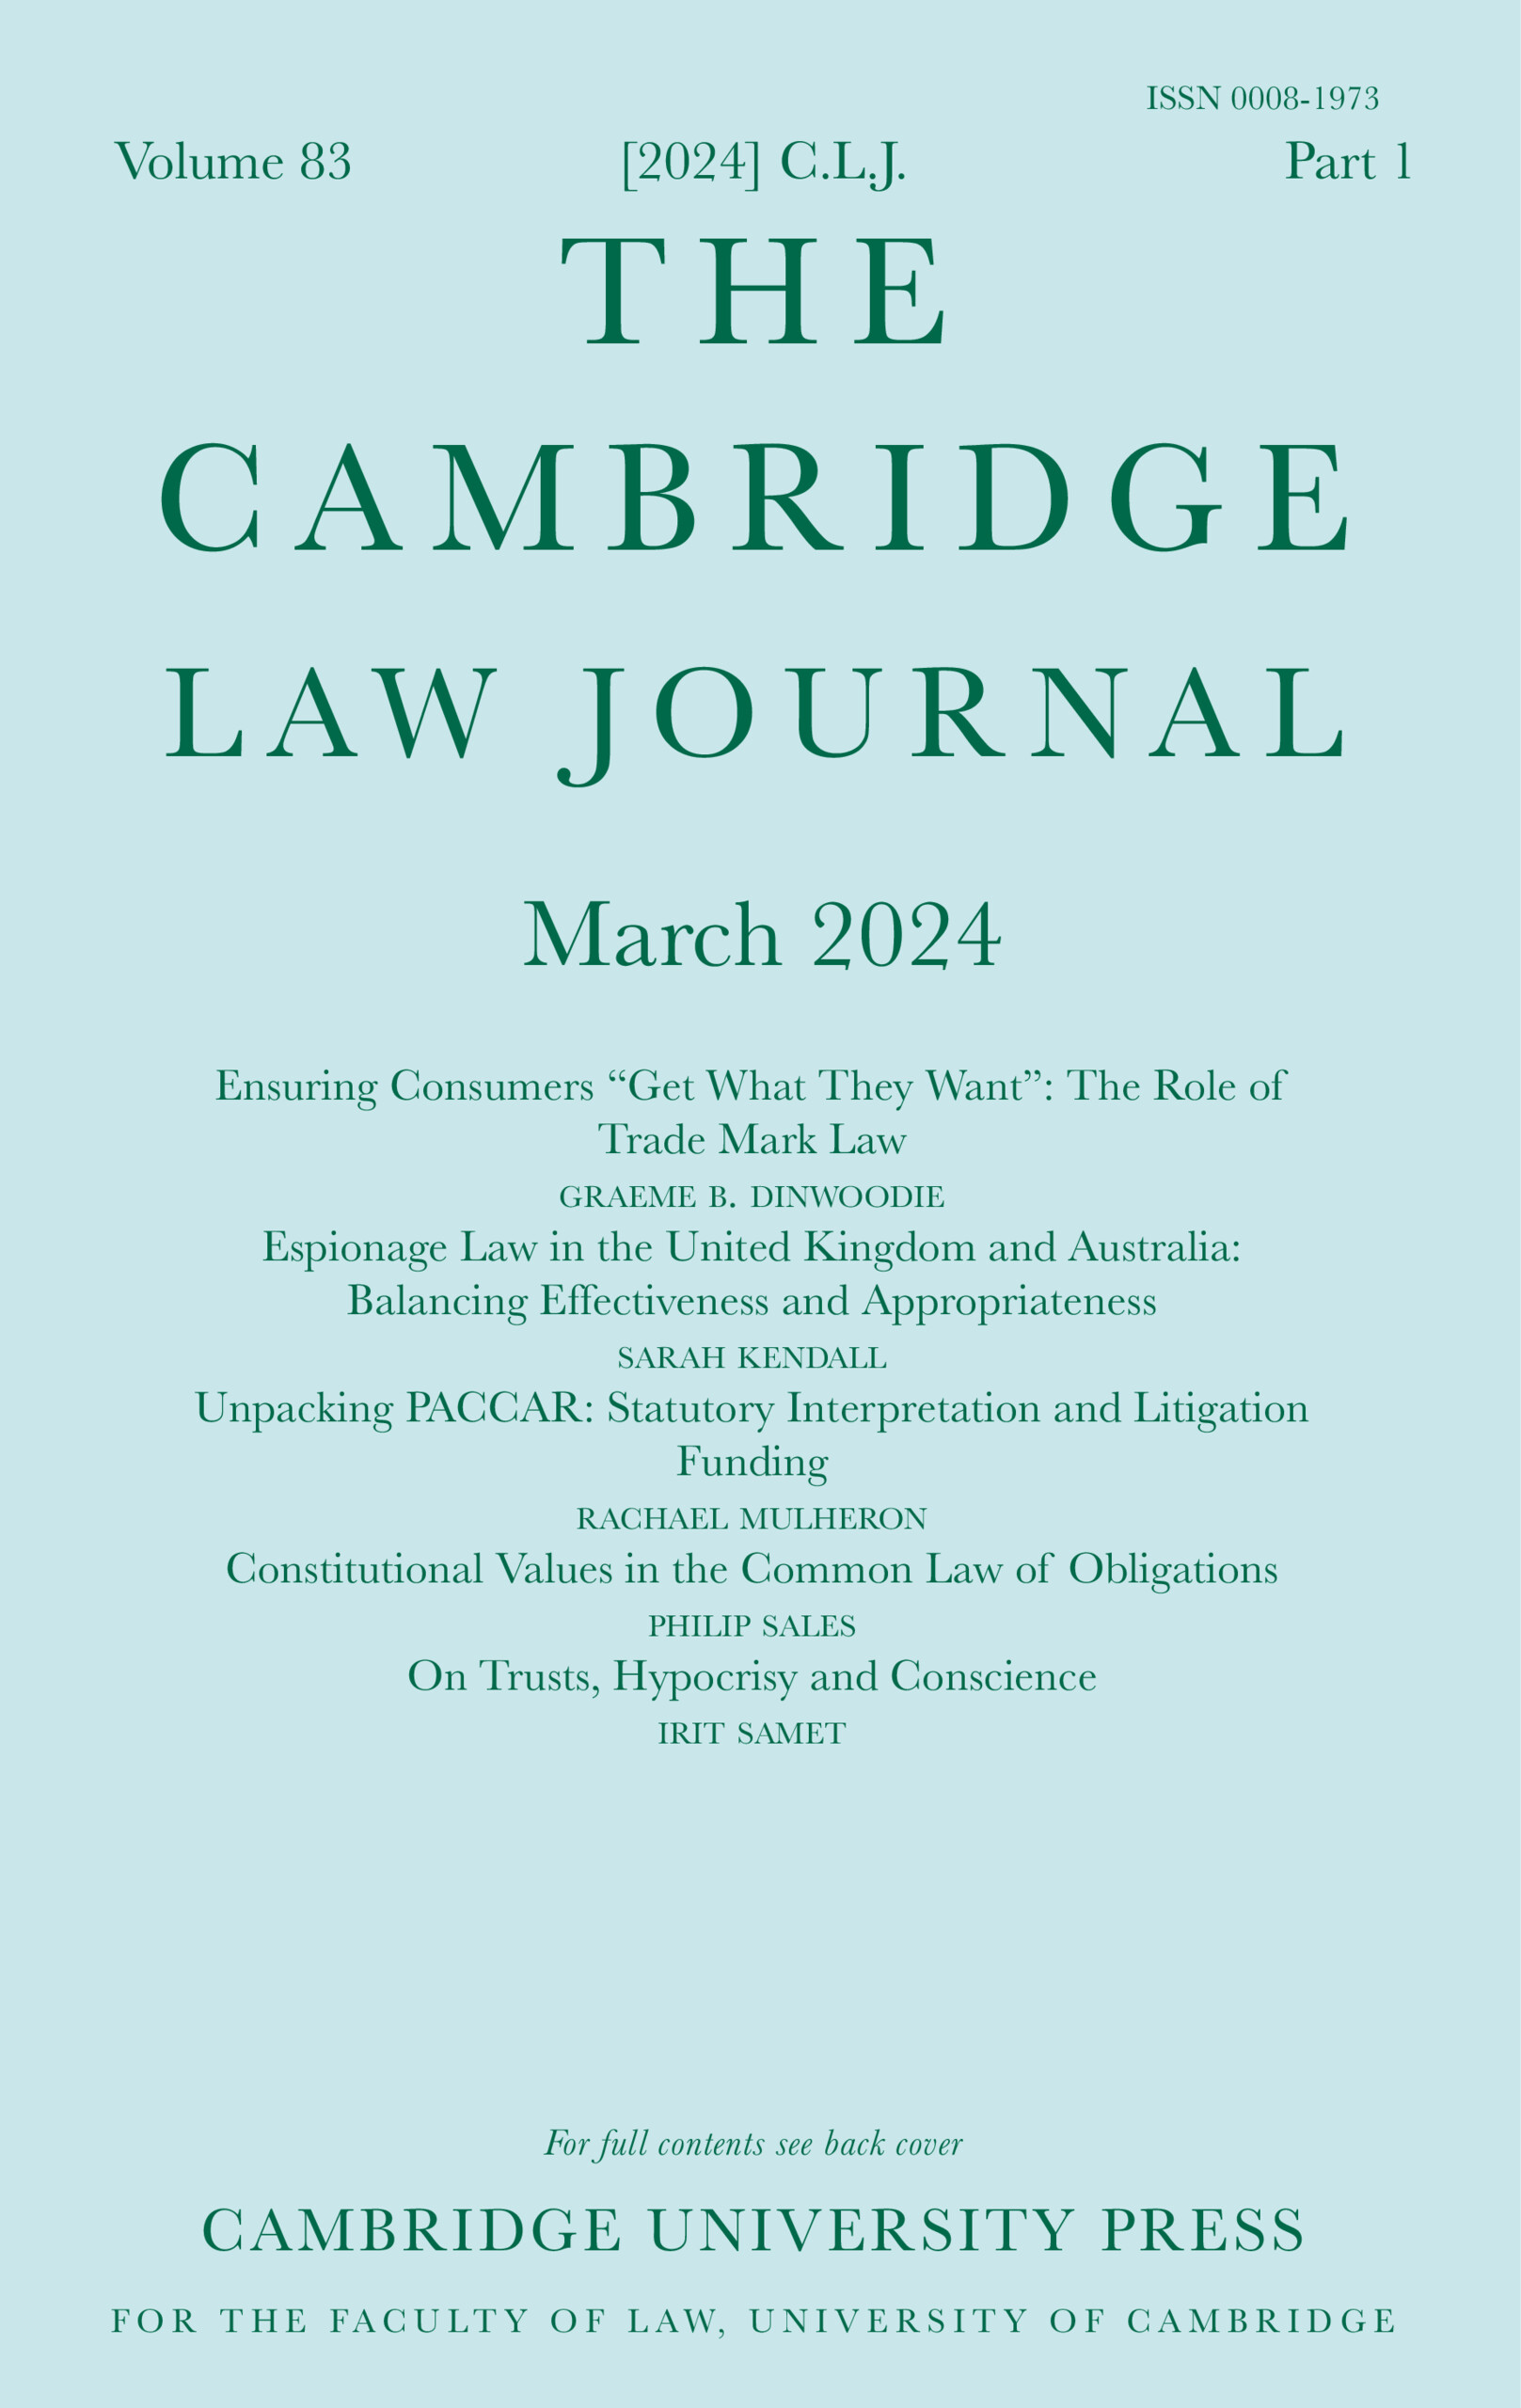 legal journal articles